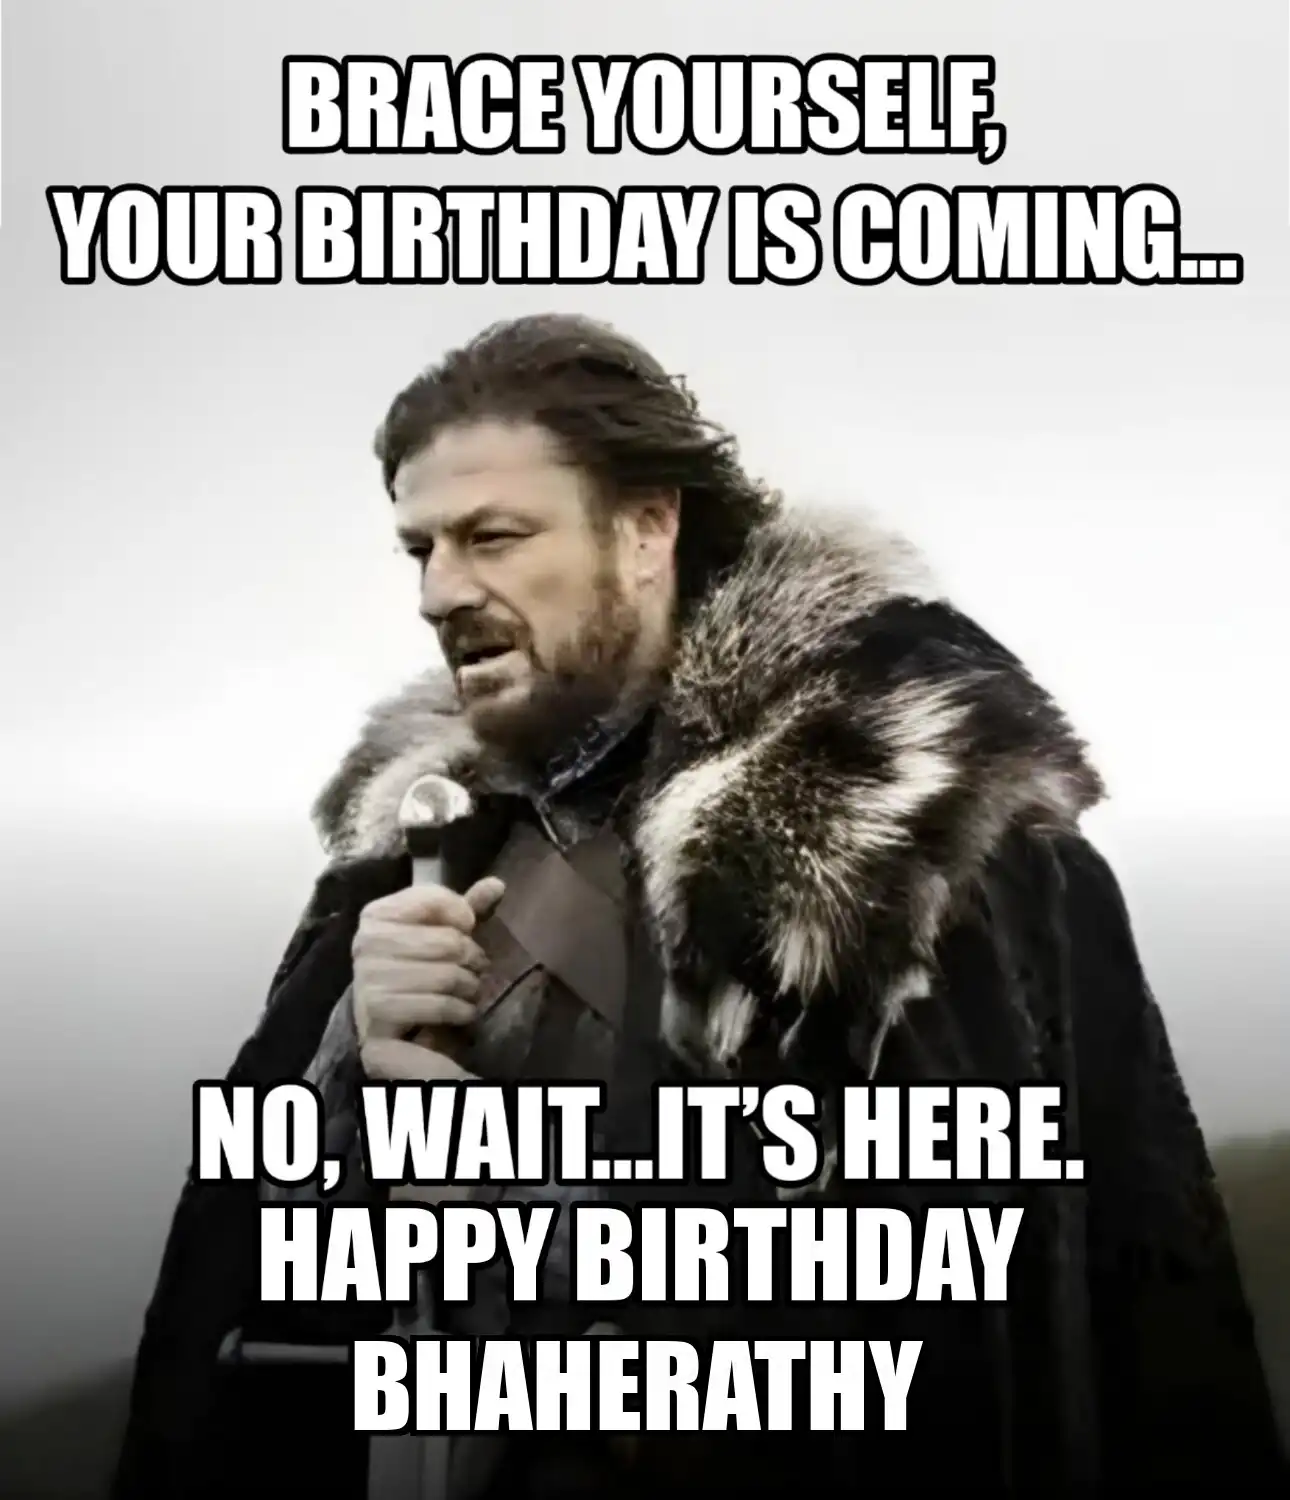 Happy Birthday Bhaherathy Brace Yourself Your Birthday Is Coming Meme